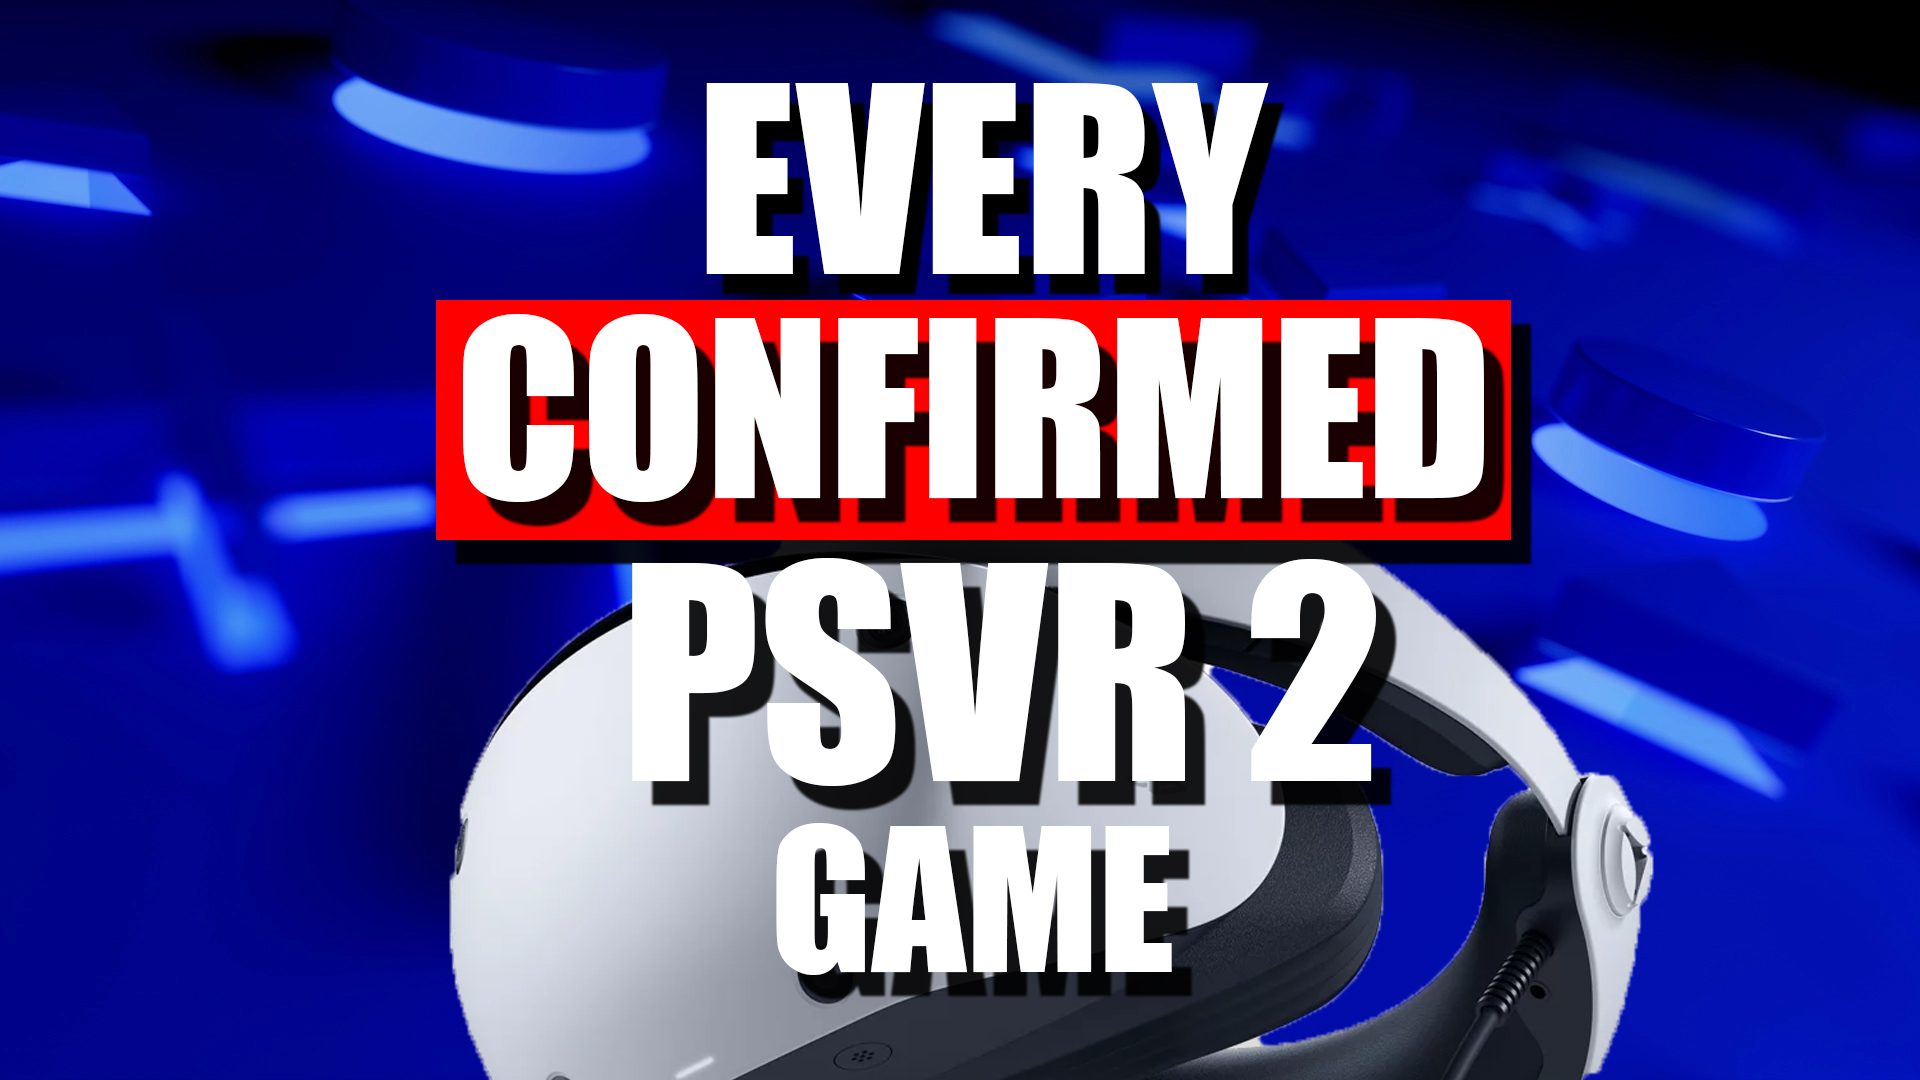 PSVR 2 Games List: Every Game Announced So Far